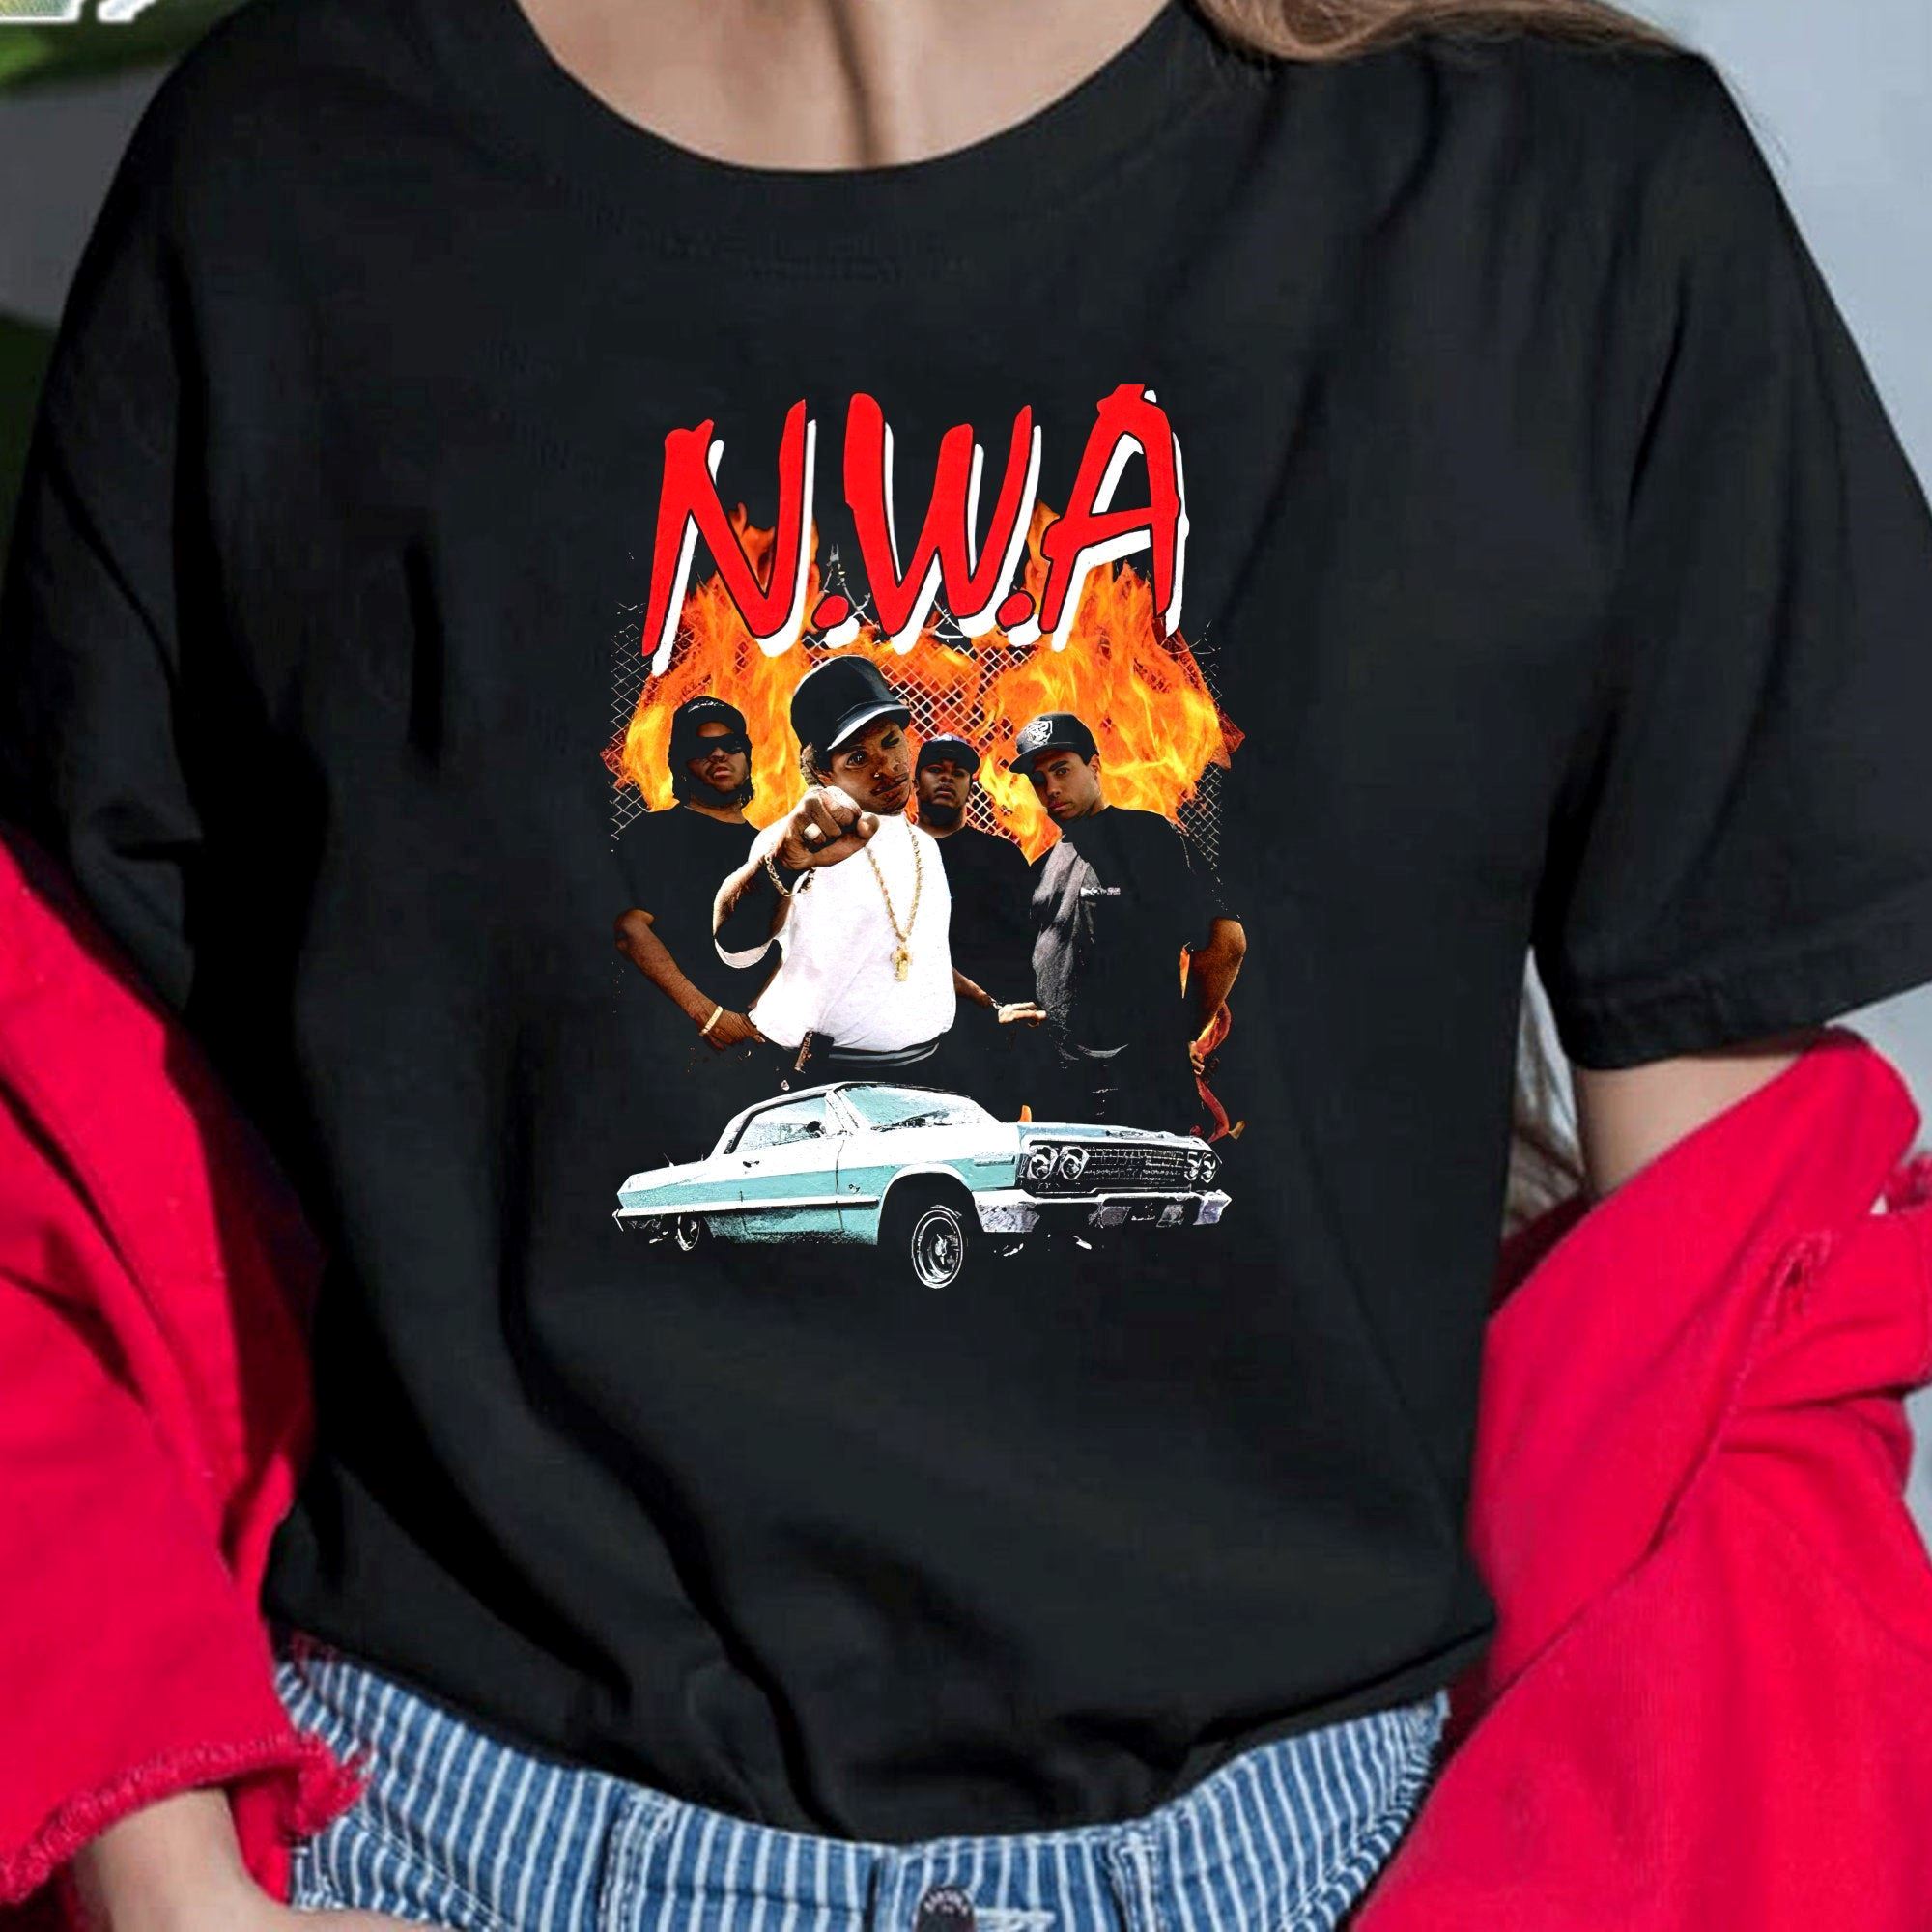 Limited Editon Nwa Vintage Hip-hop Shirt Print Art Shirt Gift For Men Women Unisex T-shirt 